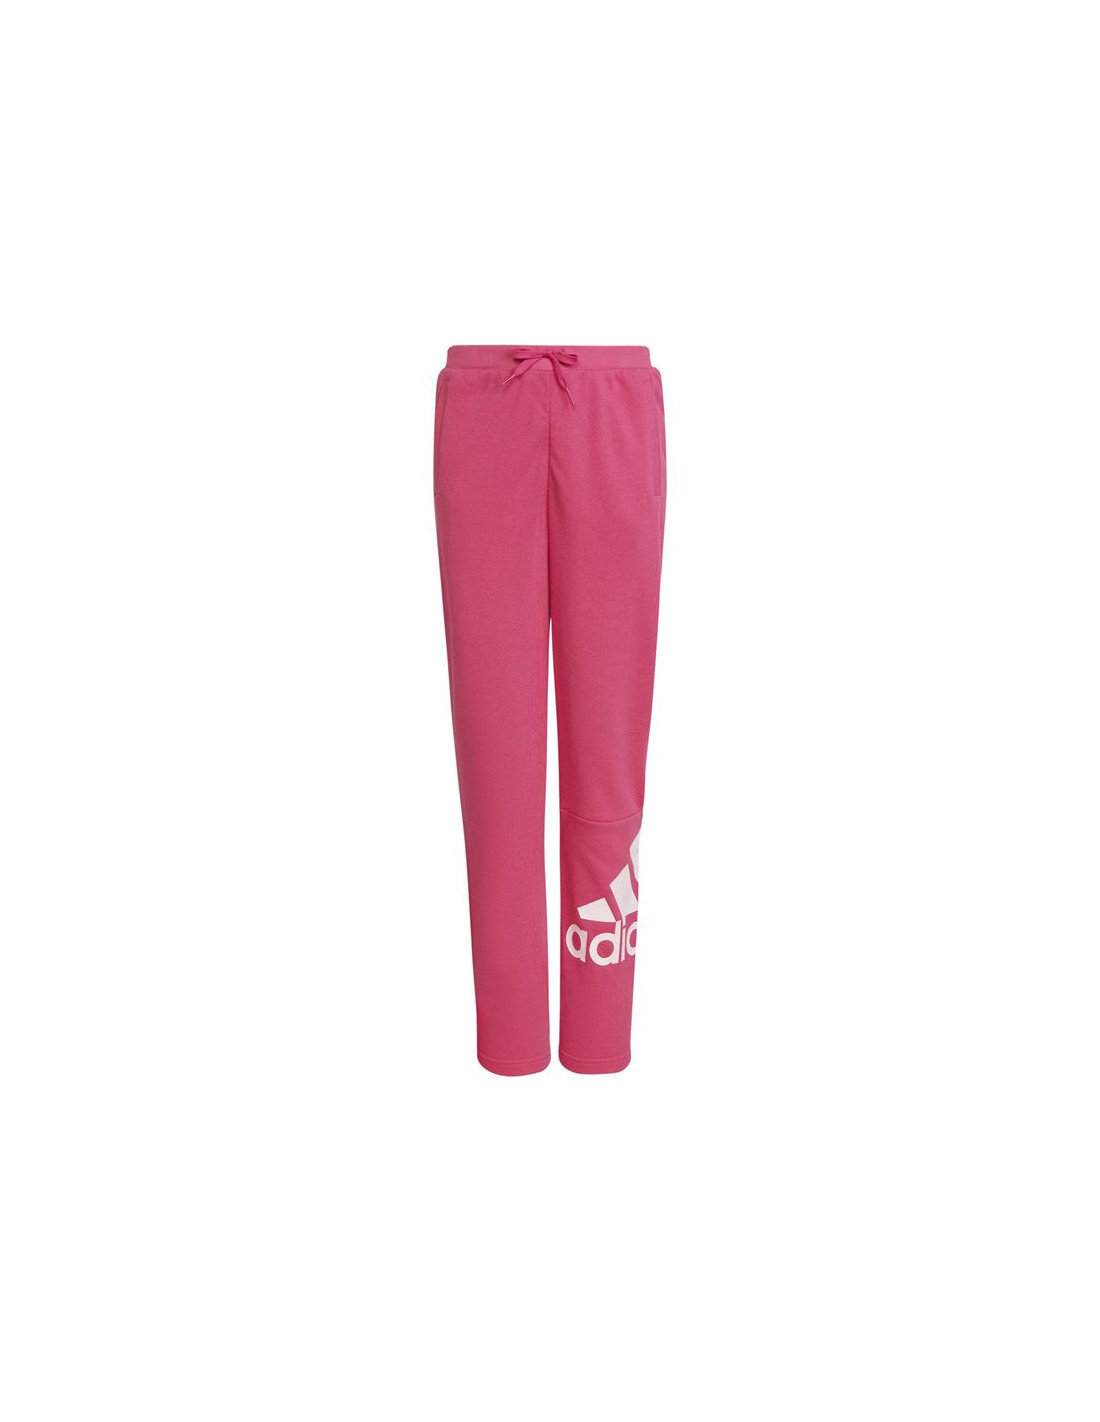 Pantalones adidas french terry niña pink